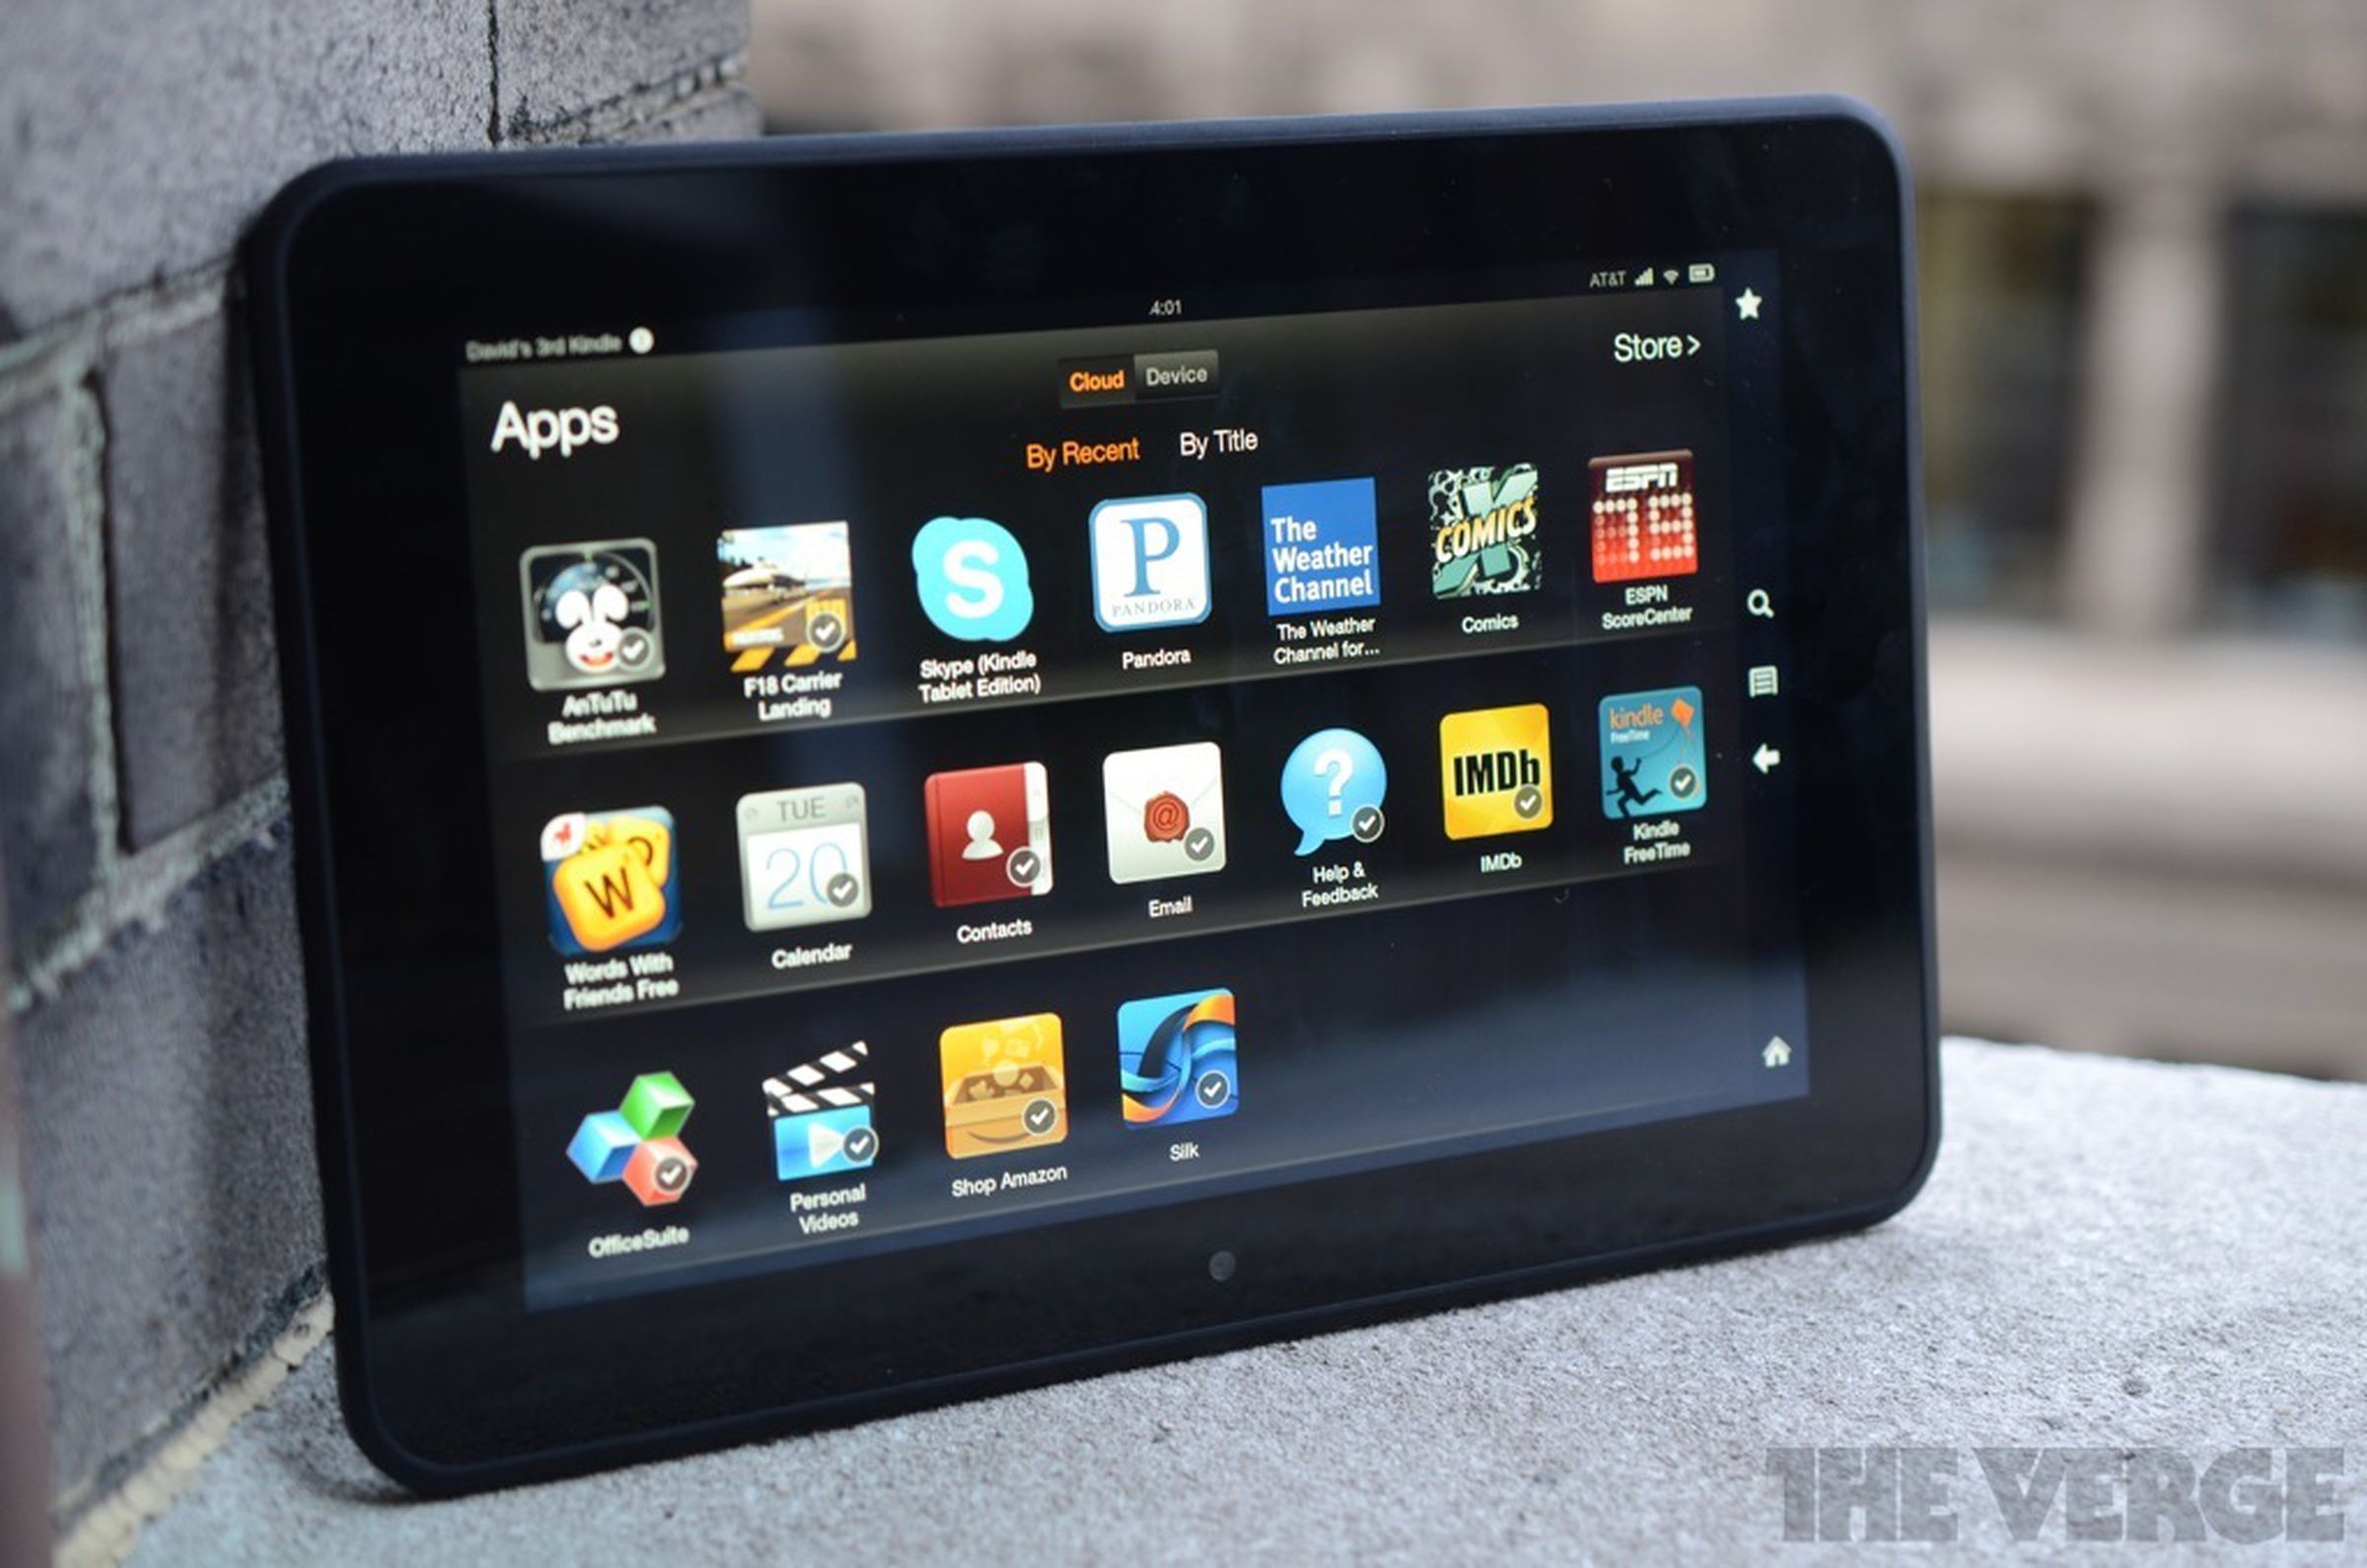 Amazon Kindle Fire HD 8.9 hands-on photos